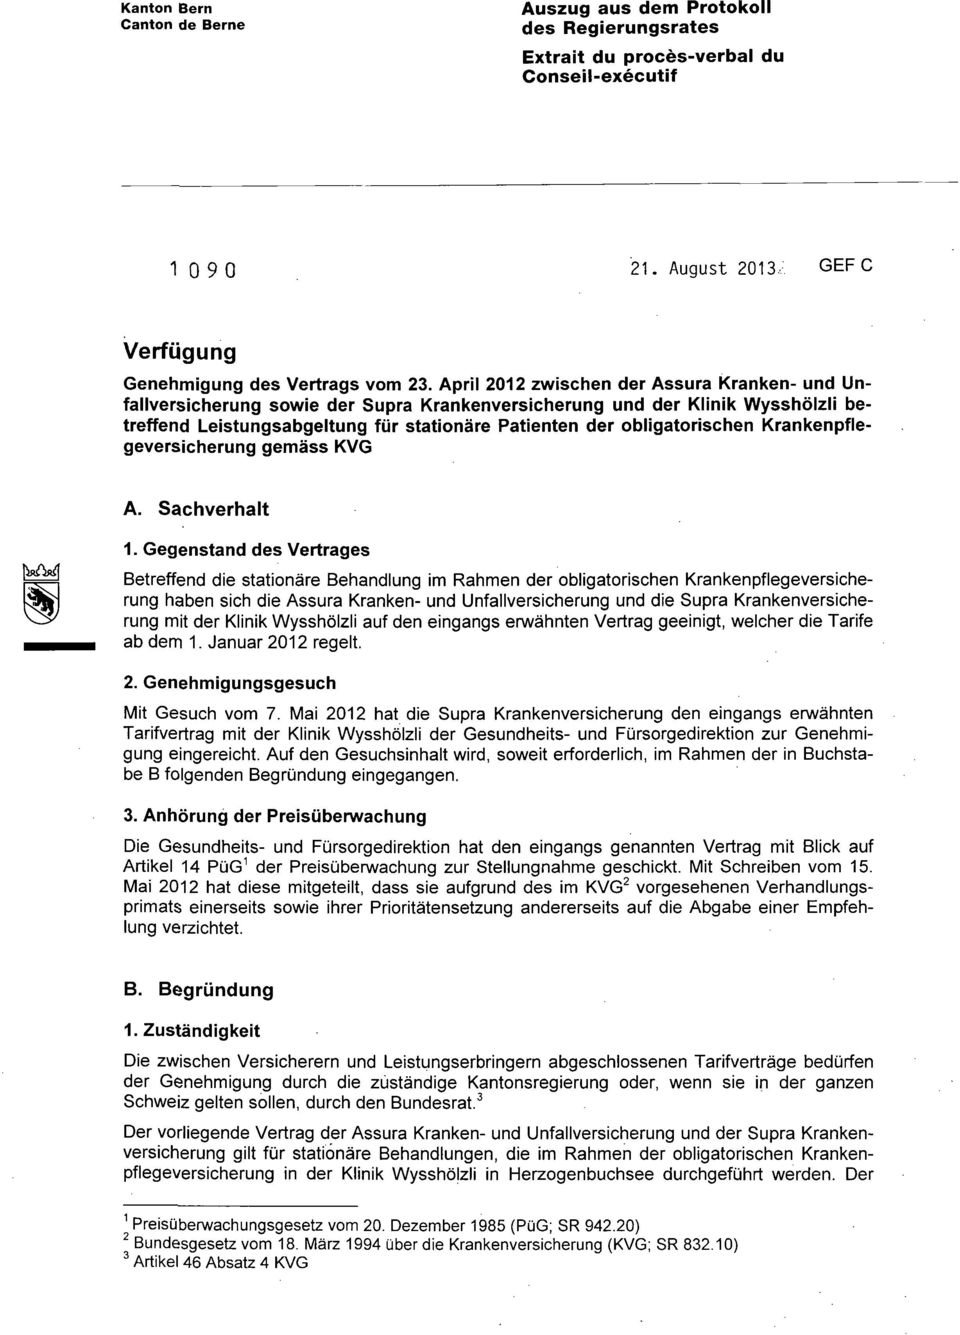 Krankenpflegeversicherung gemäss KVG A. Sachverhalt 1.